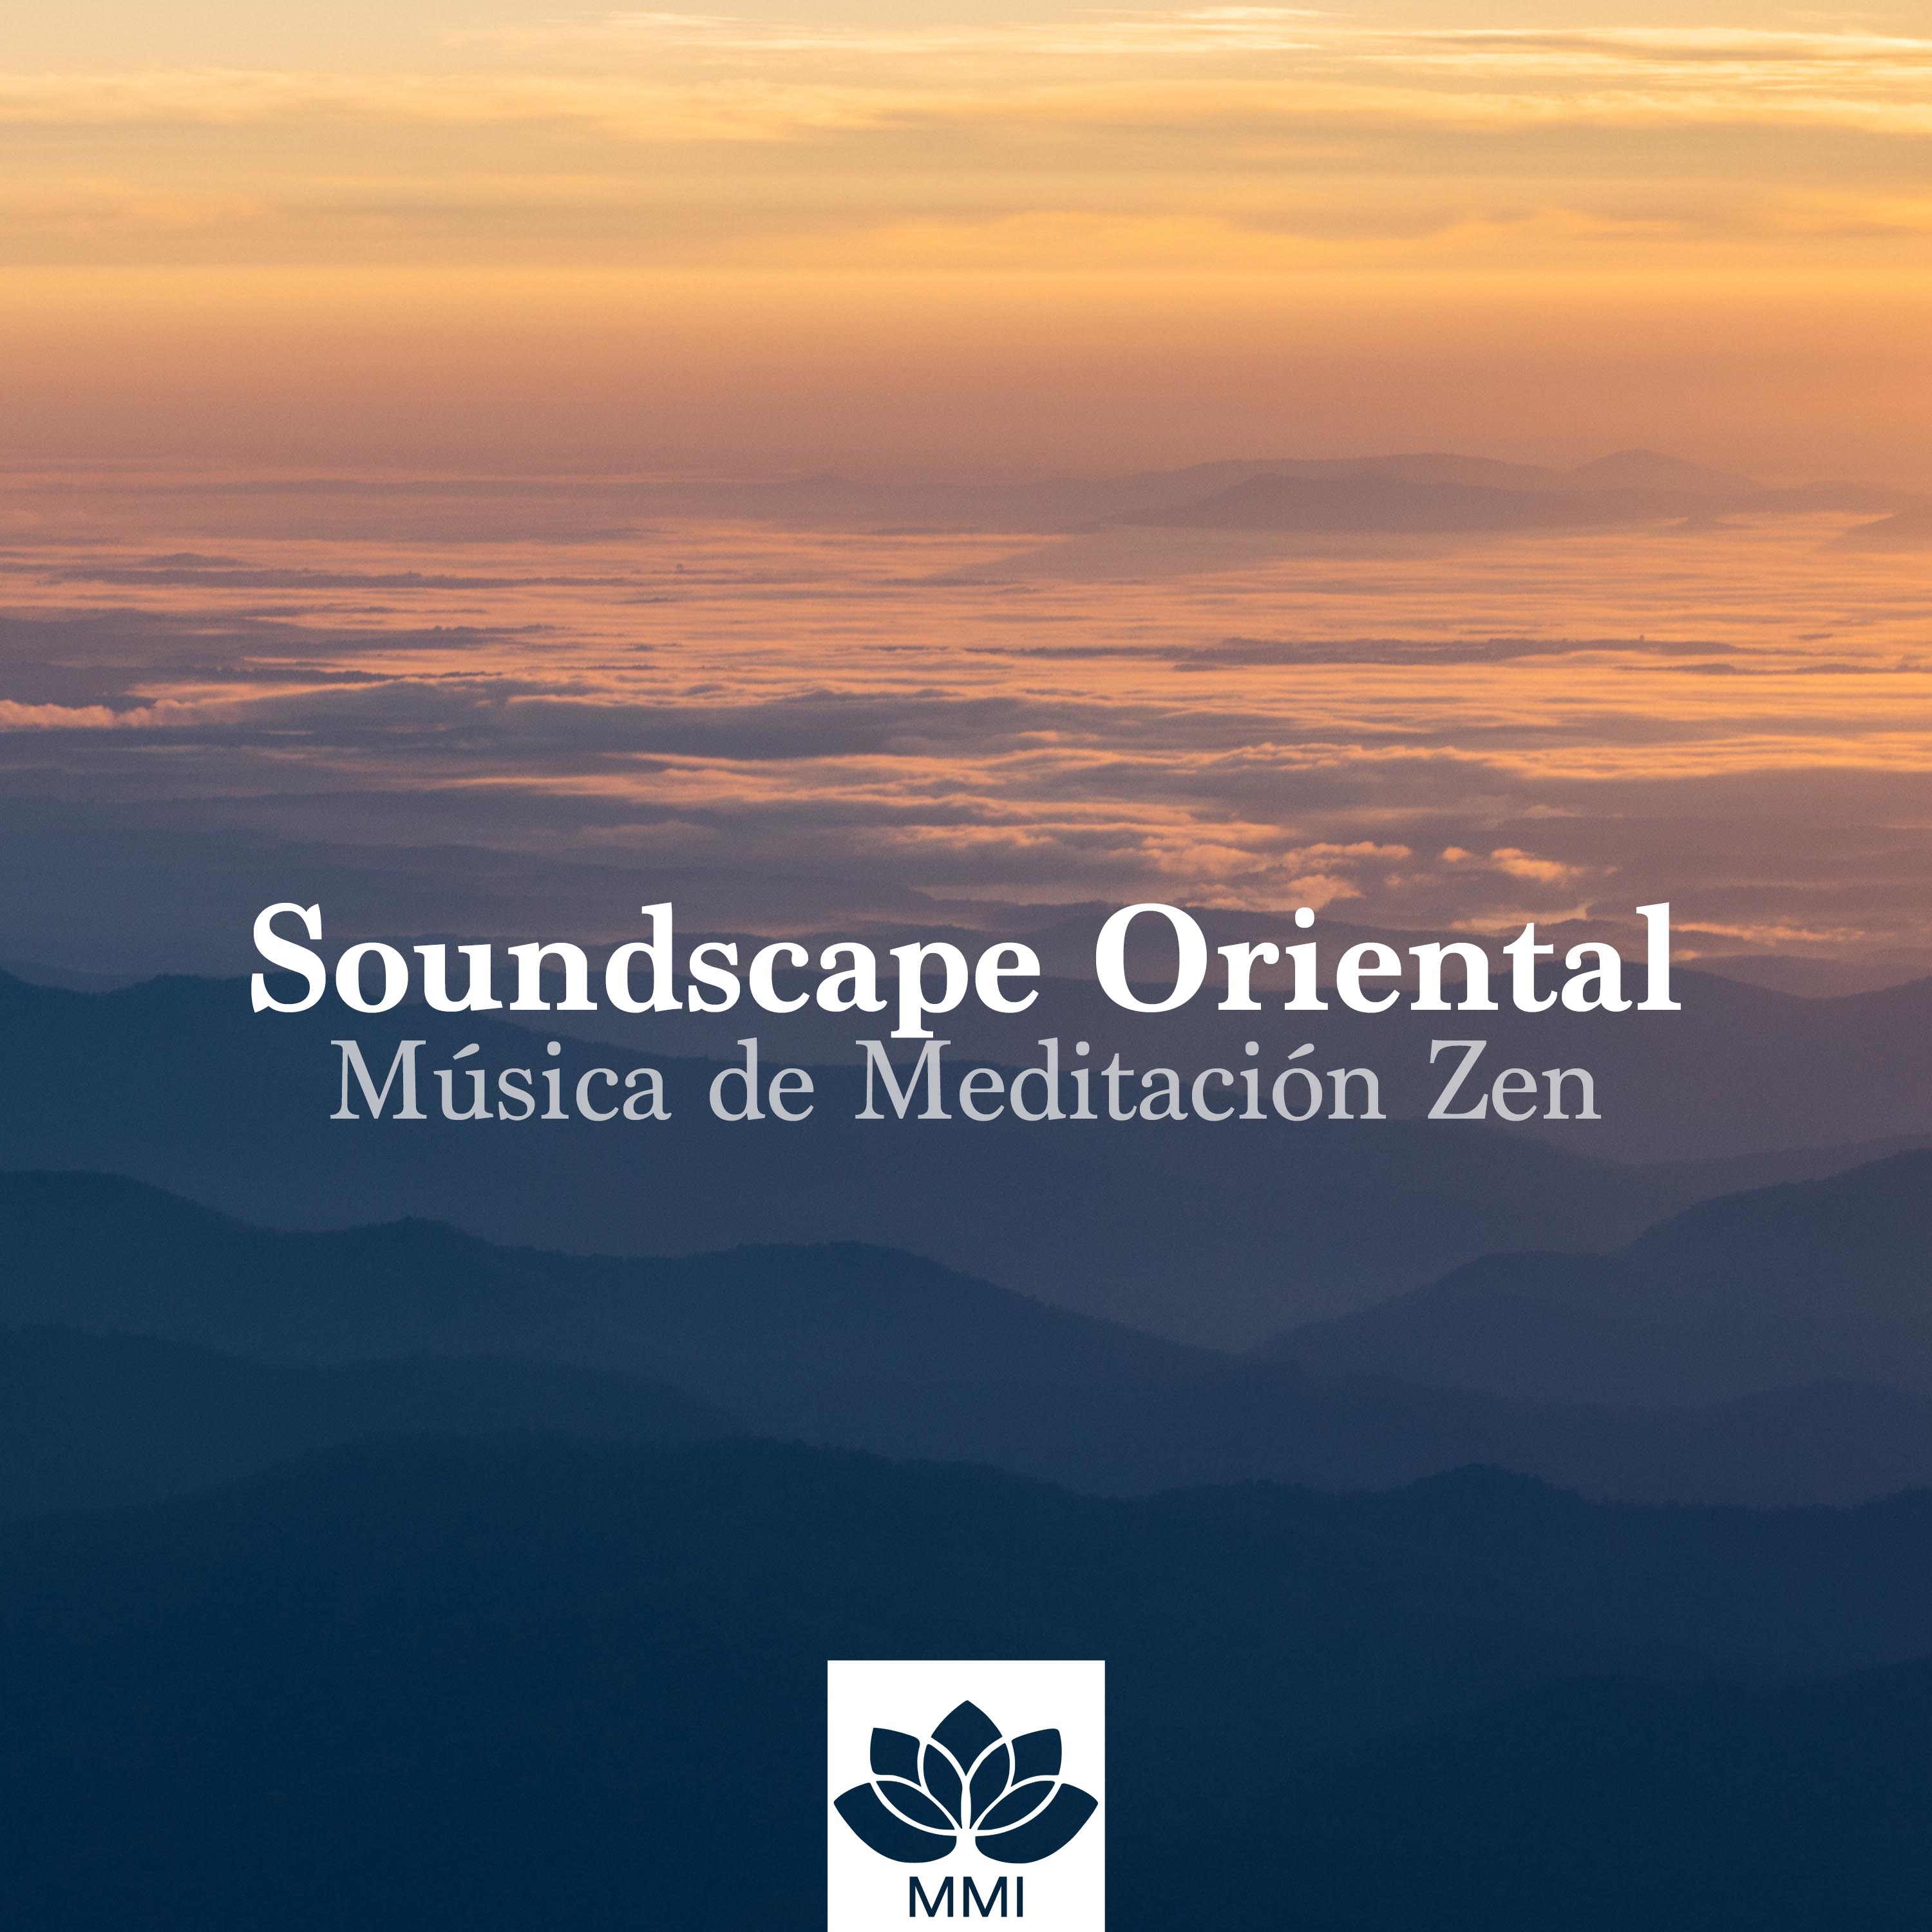 Soundscape Oriental  Mu sica de Meditacio n Zen, Mu sica de Relajacio n para Meditacion Guiada